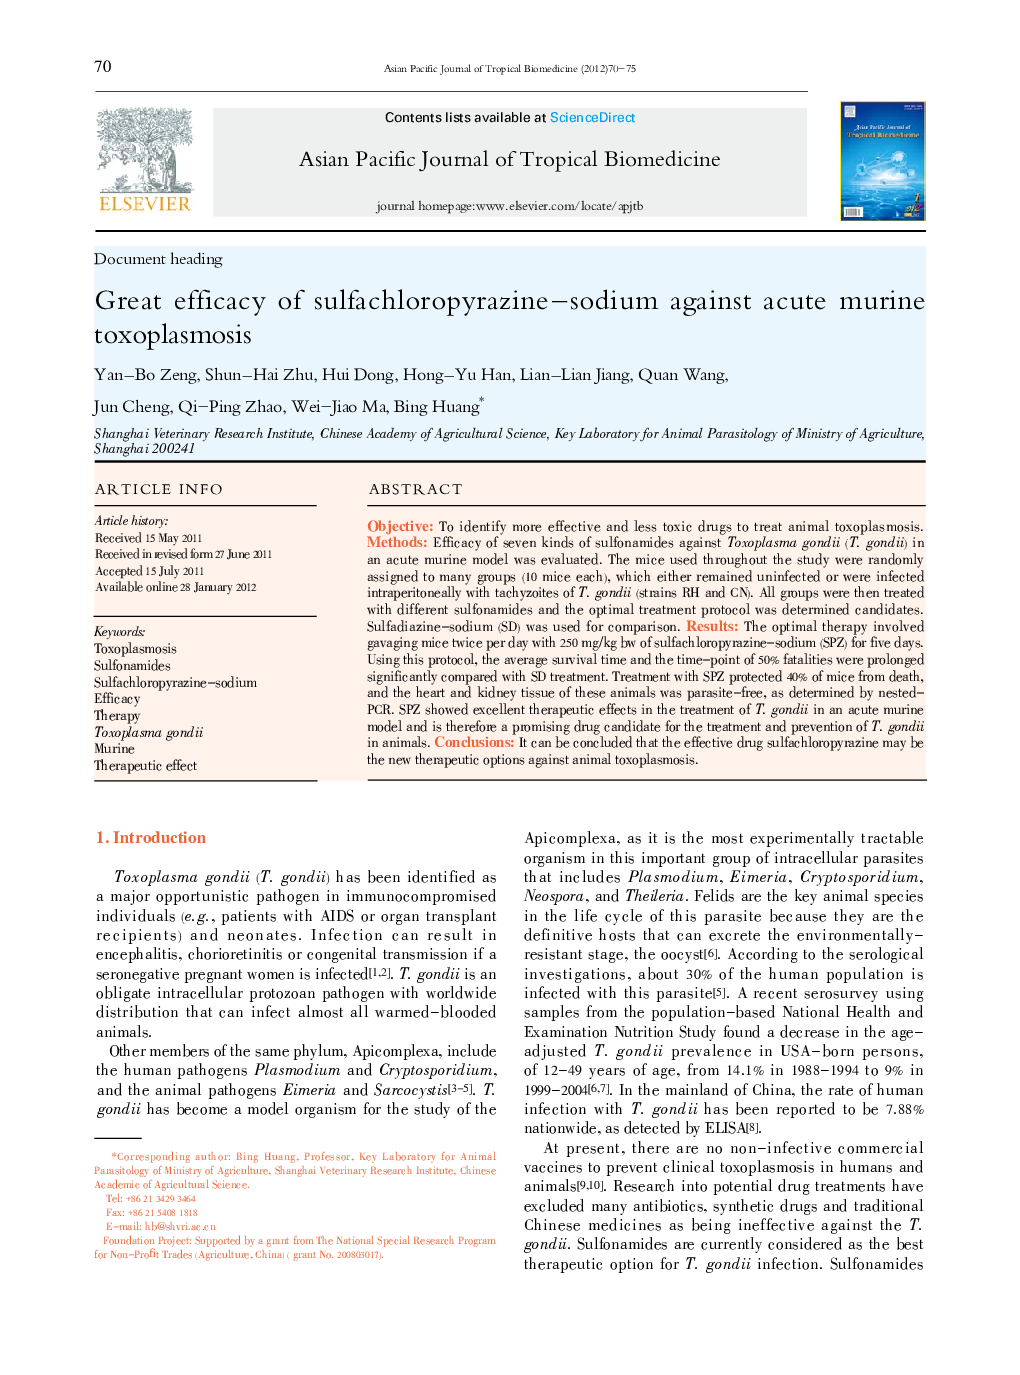 Great efficacy of sulfachloropyrazine-sodium against acute murine toxoplasmosis